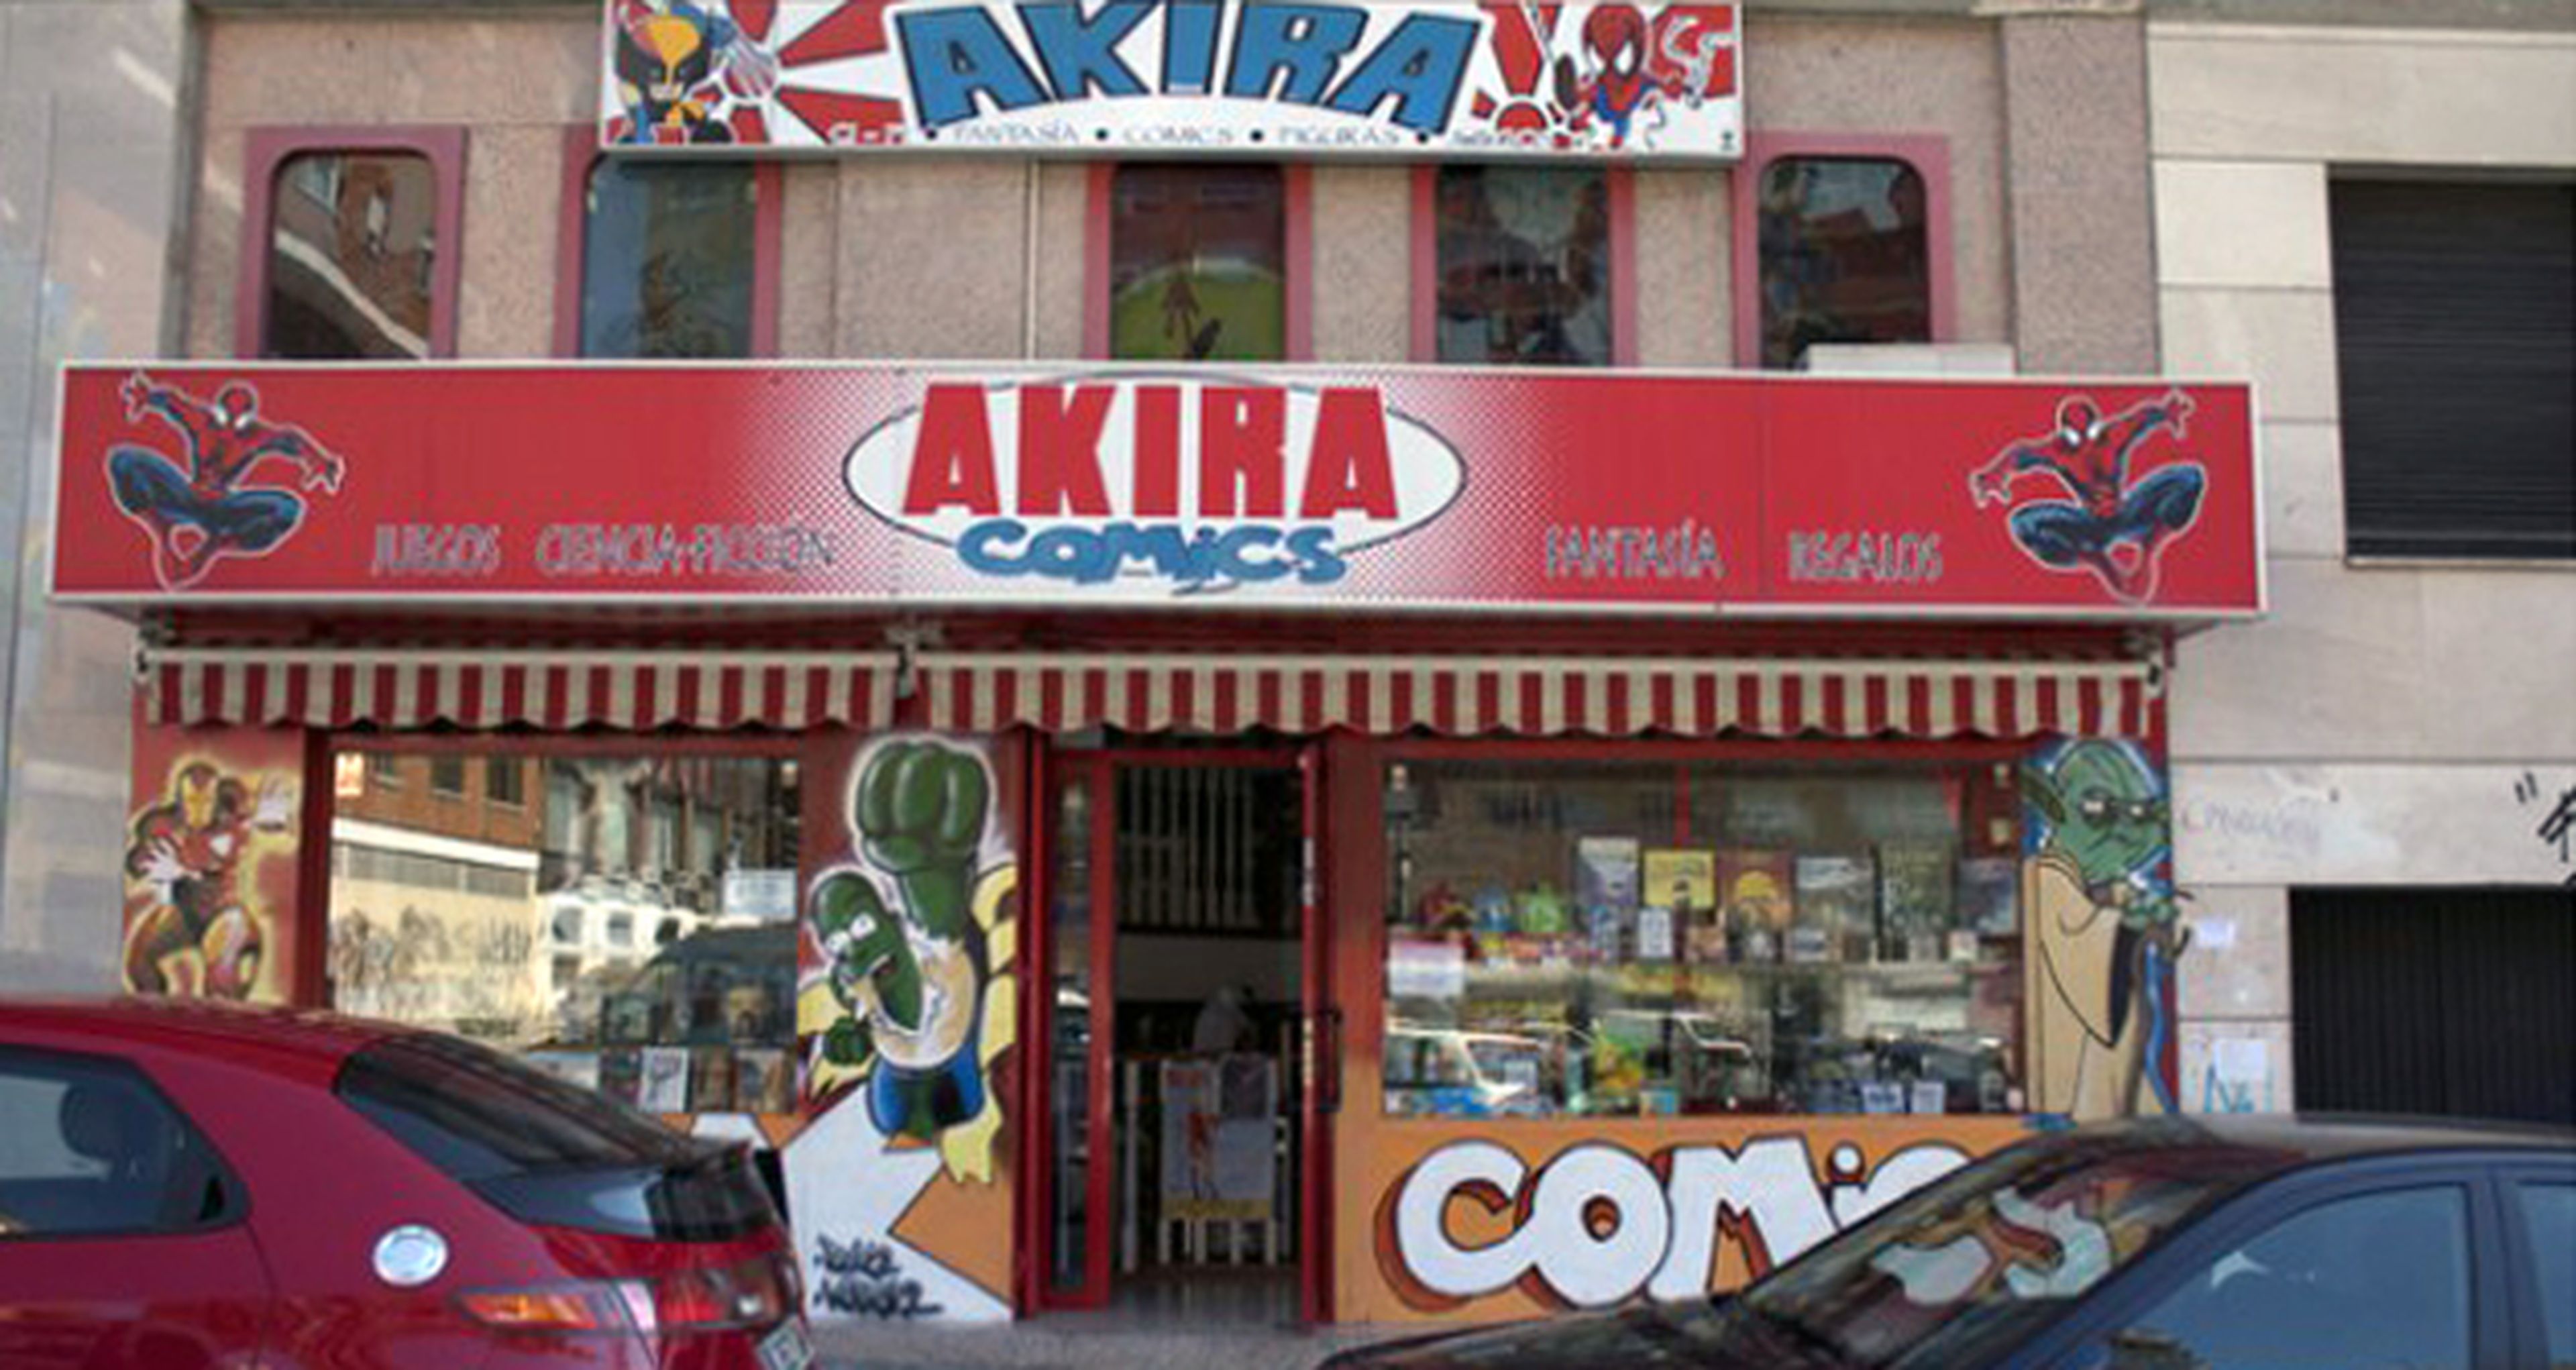 Tiendas con historia: Akira Cómics